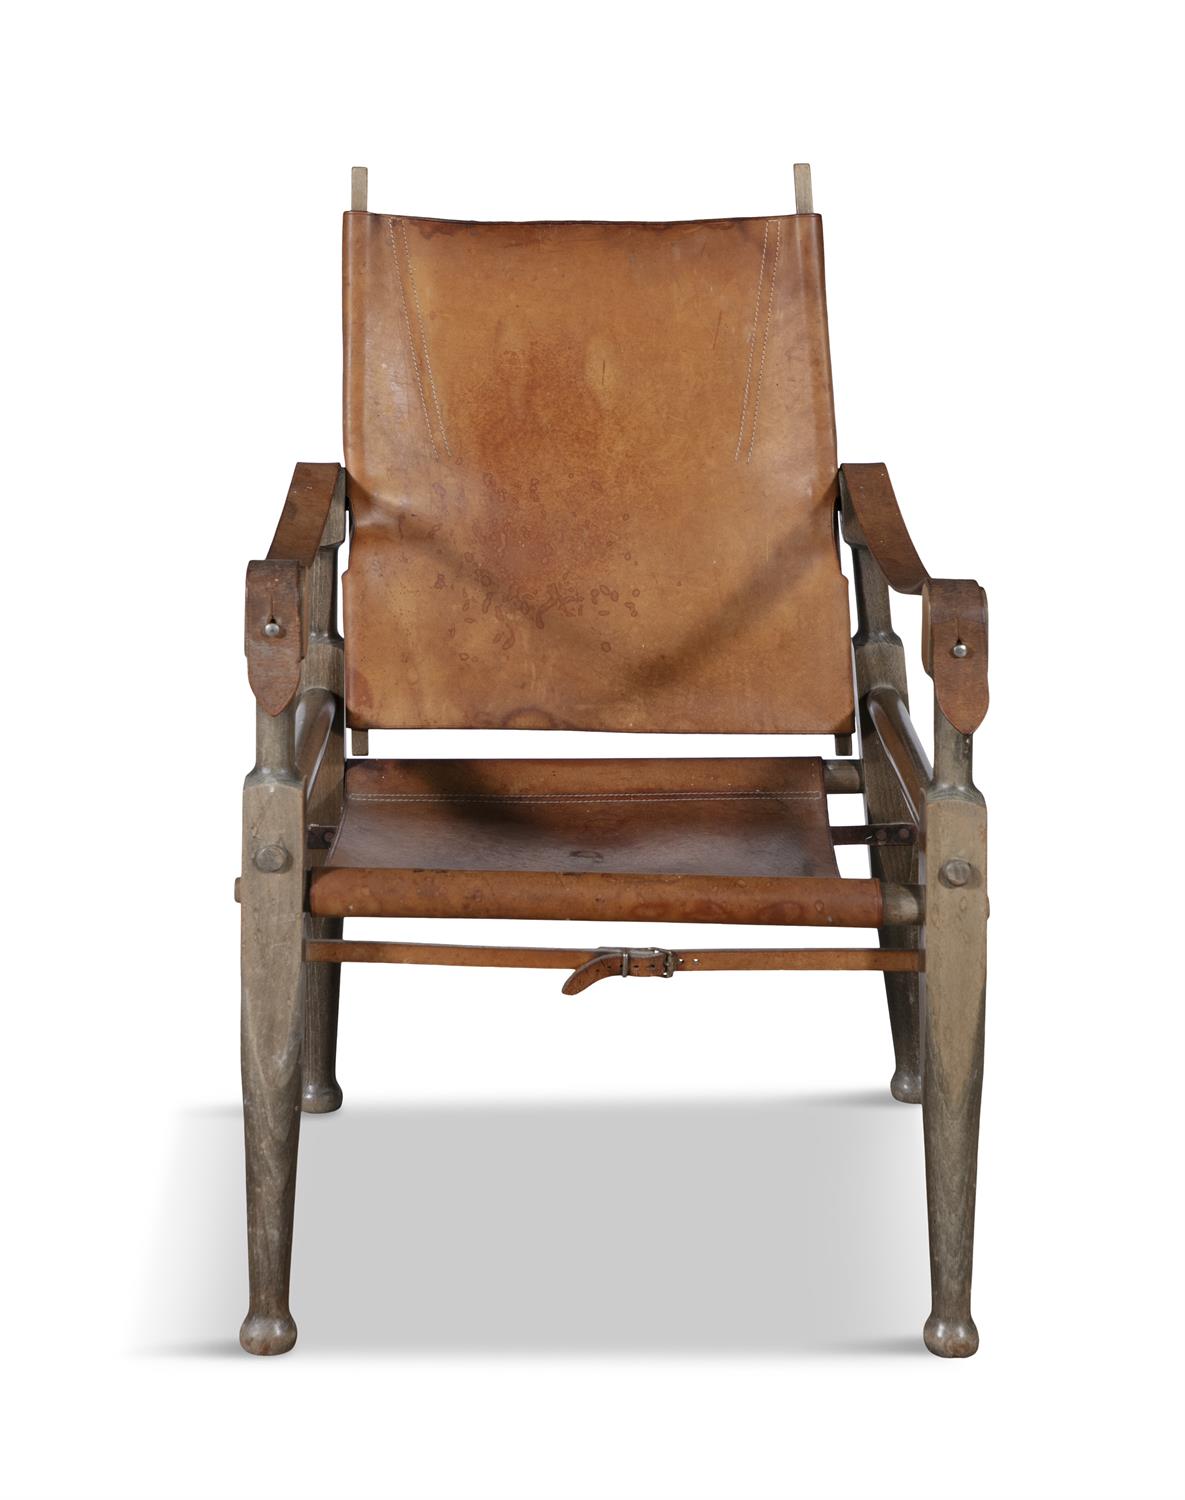 WILHELM KIENZLE WOHNBEDARF A leather Safari Chair by Wilhelm Kienzle Wohnbedarf. Switzerland, c. - Image 2 of 5